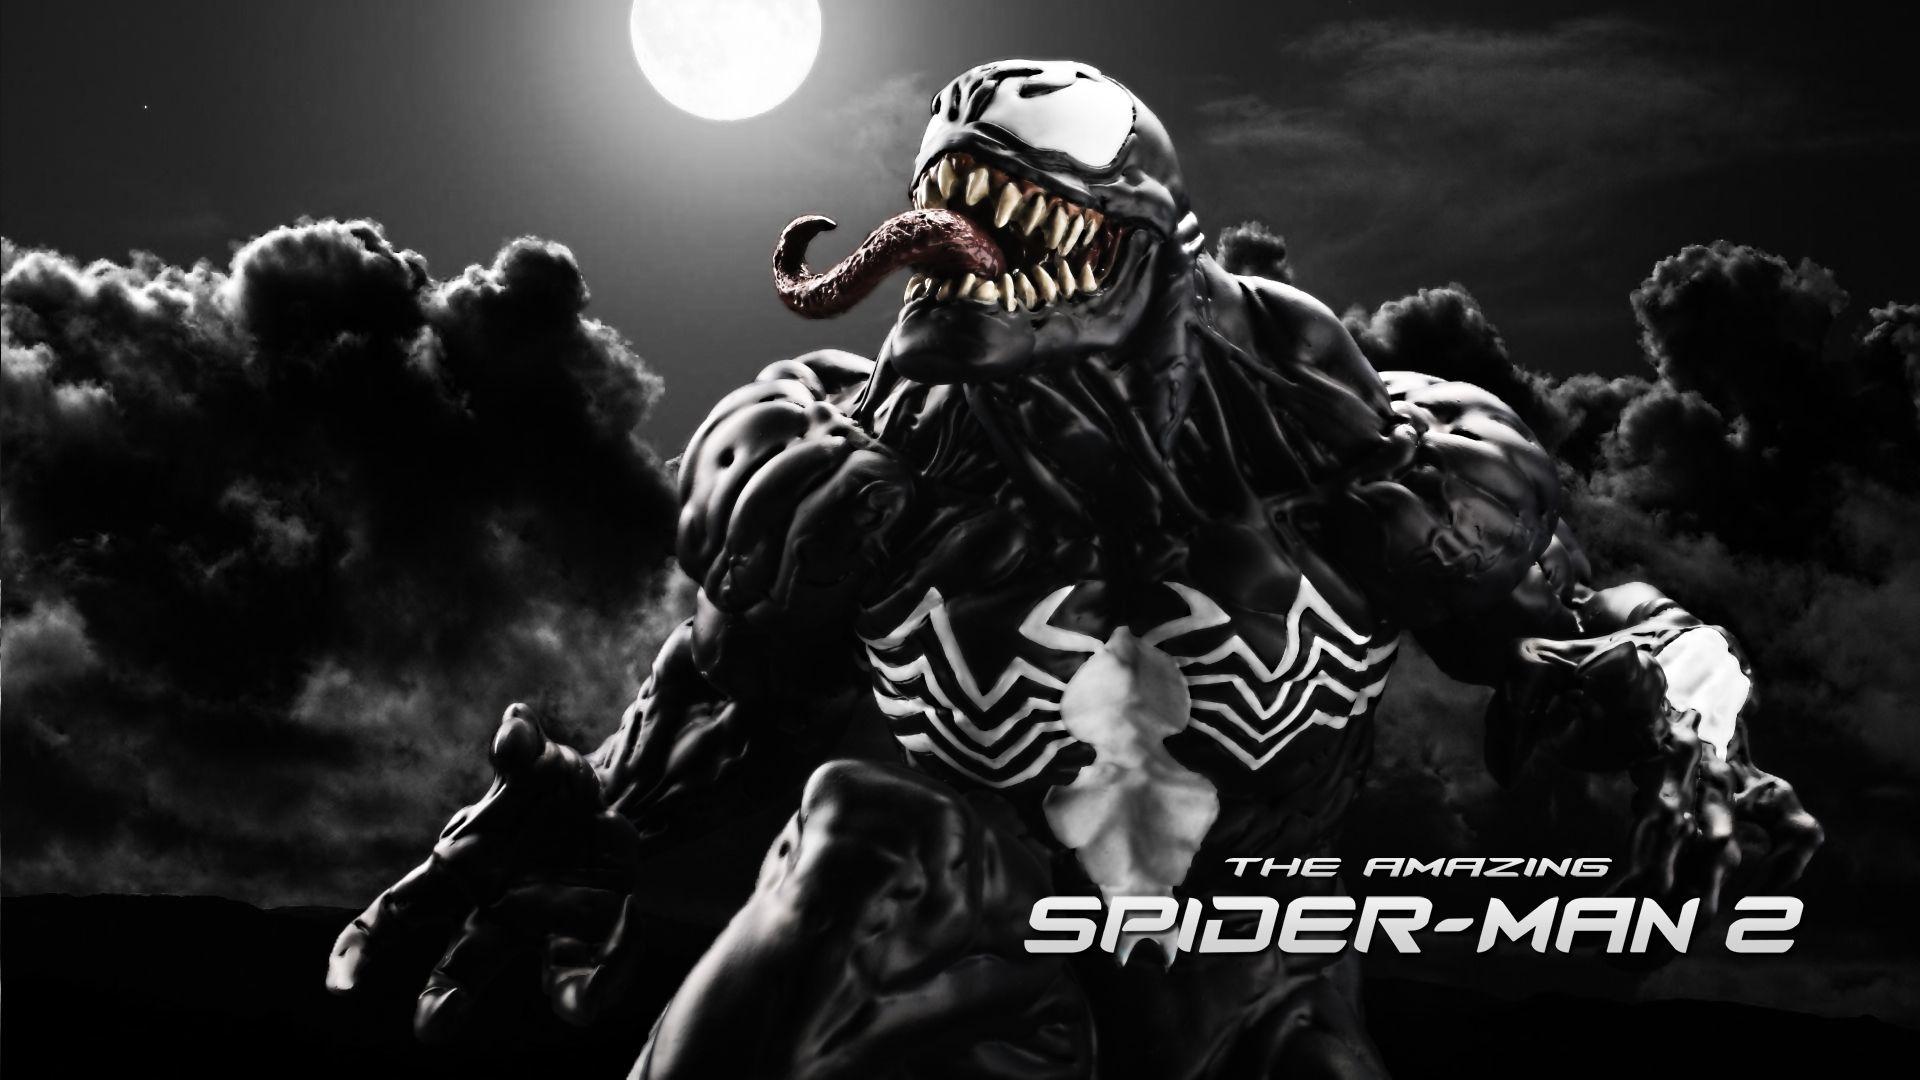 Spiderman Venom Wallpaper For iPhone #rw6